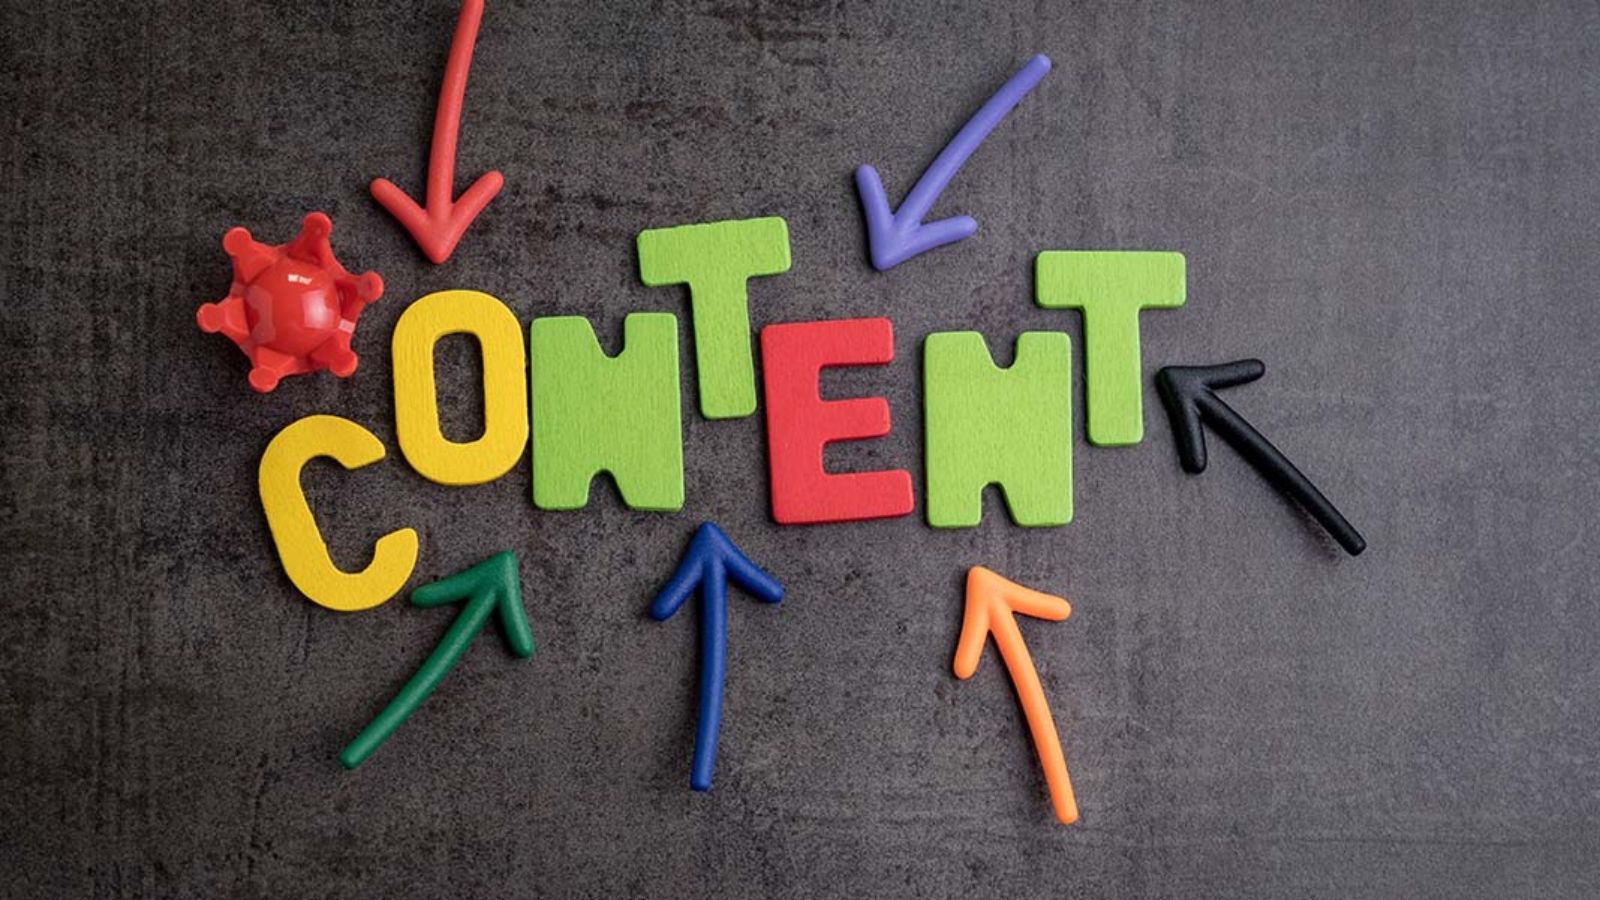 Define-What-Online-Content-Engagement-Is